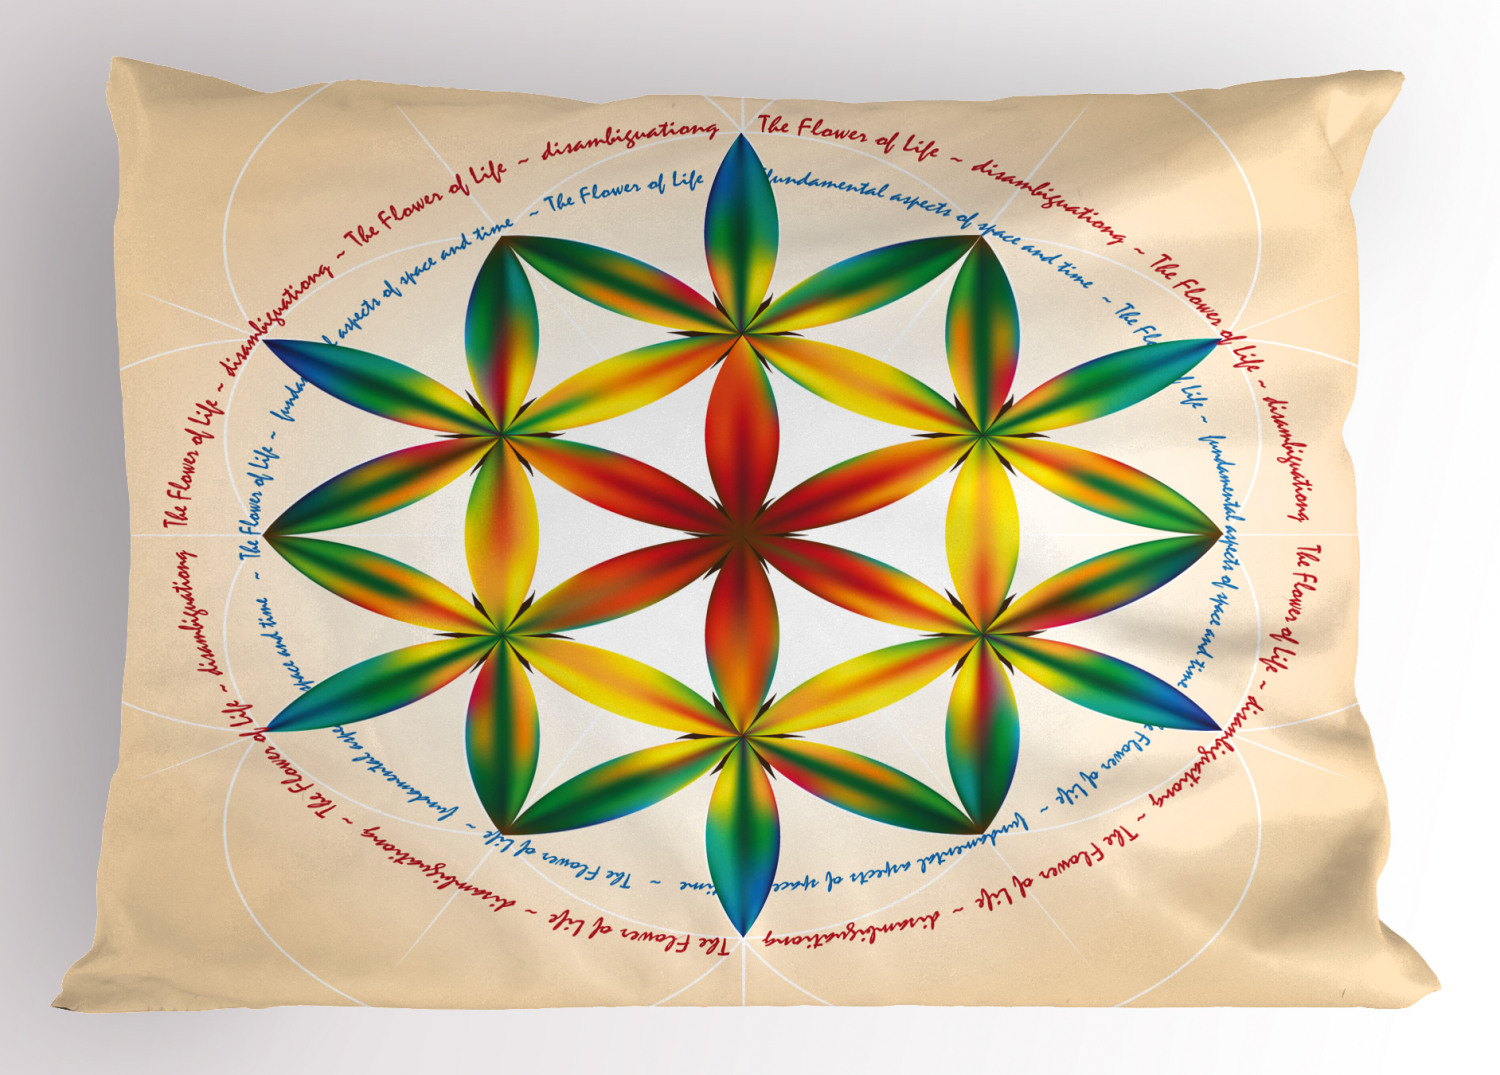 Details about   Ornate Geometric Pillow Sham Decorative Pillowcase 3 Sizes Bedroom Decoration 